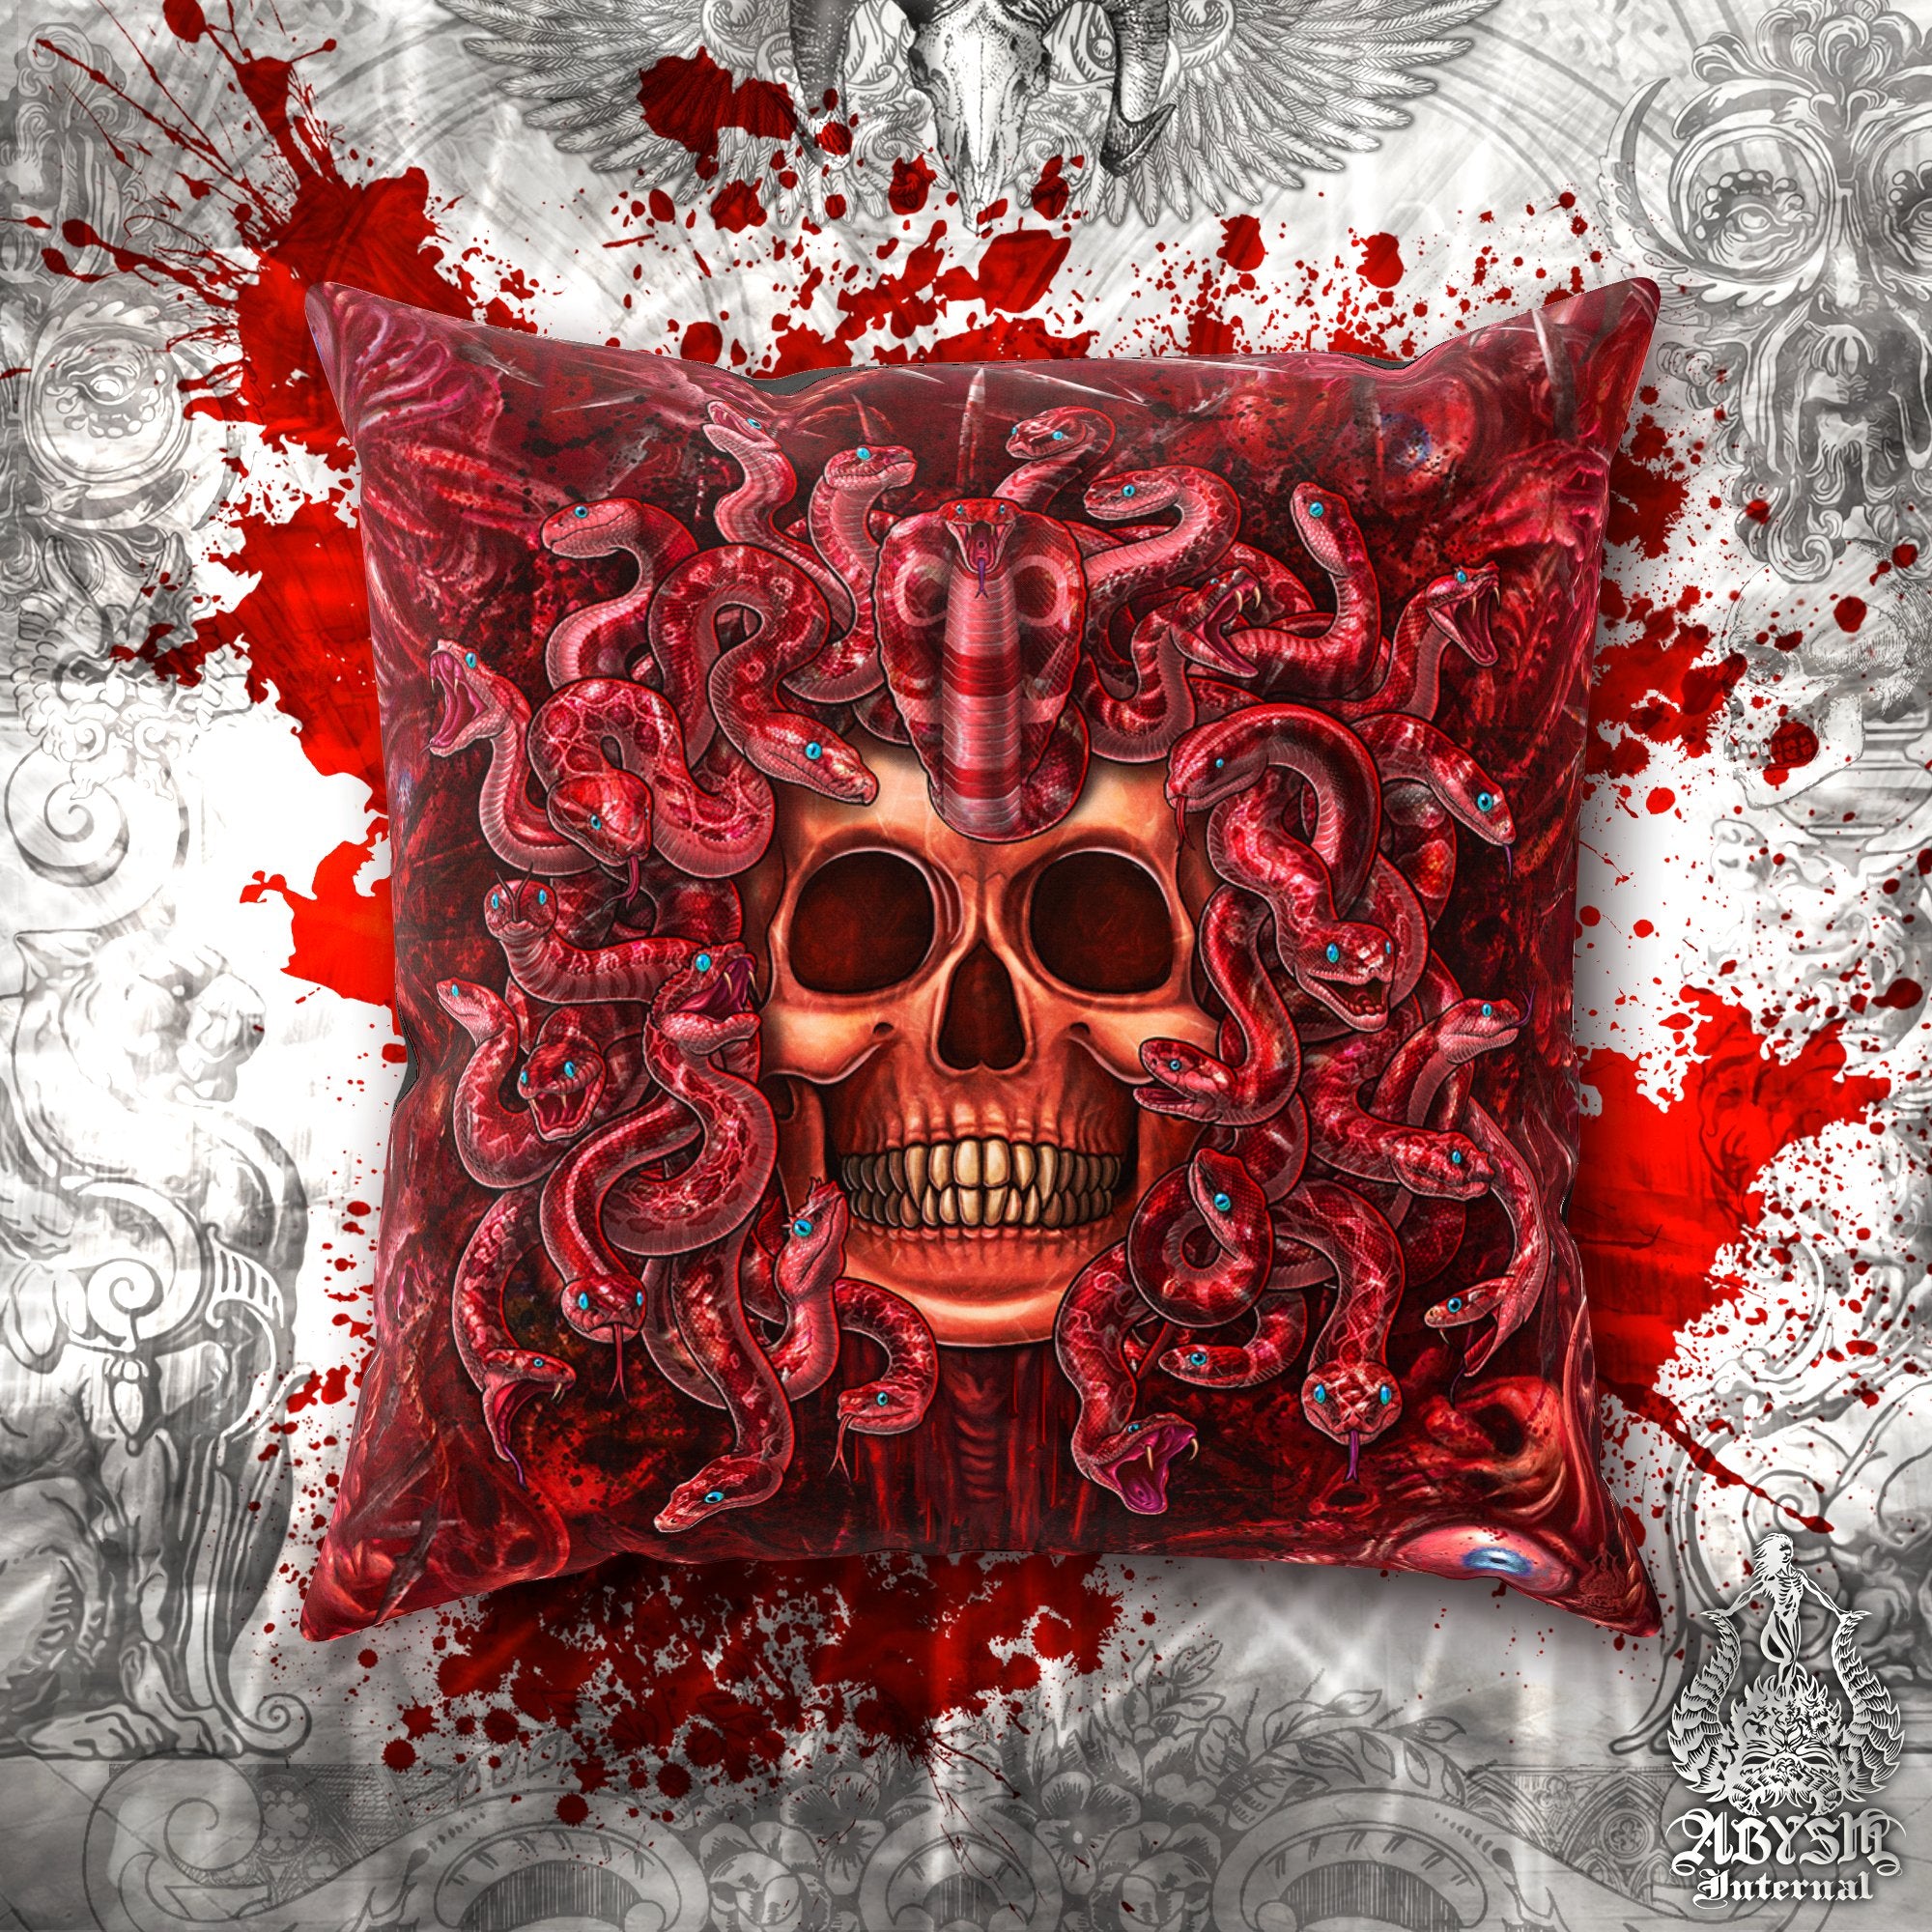 Halloween Throw Pillow, Decorative Accent Pillow, Square Cushion Cover, Medusa, Horror Room Decor, Alternative Home - Gore & Flesh Snakes, 3 Faces - Abysm Internal